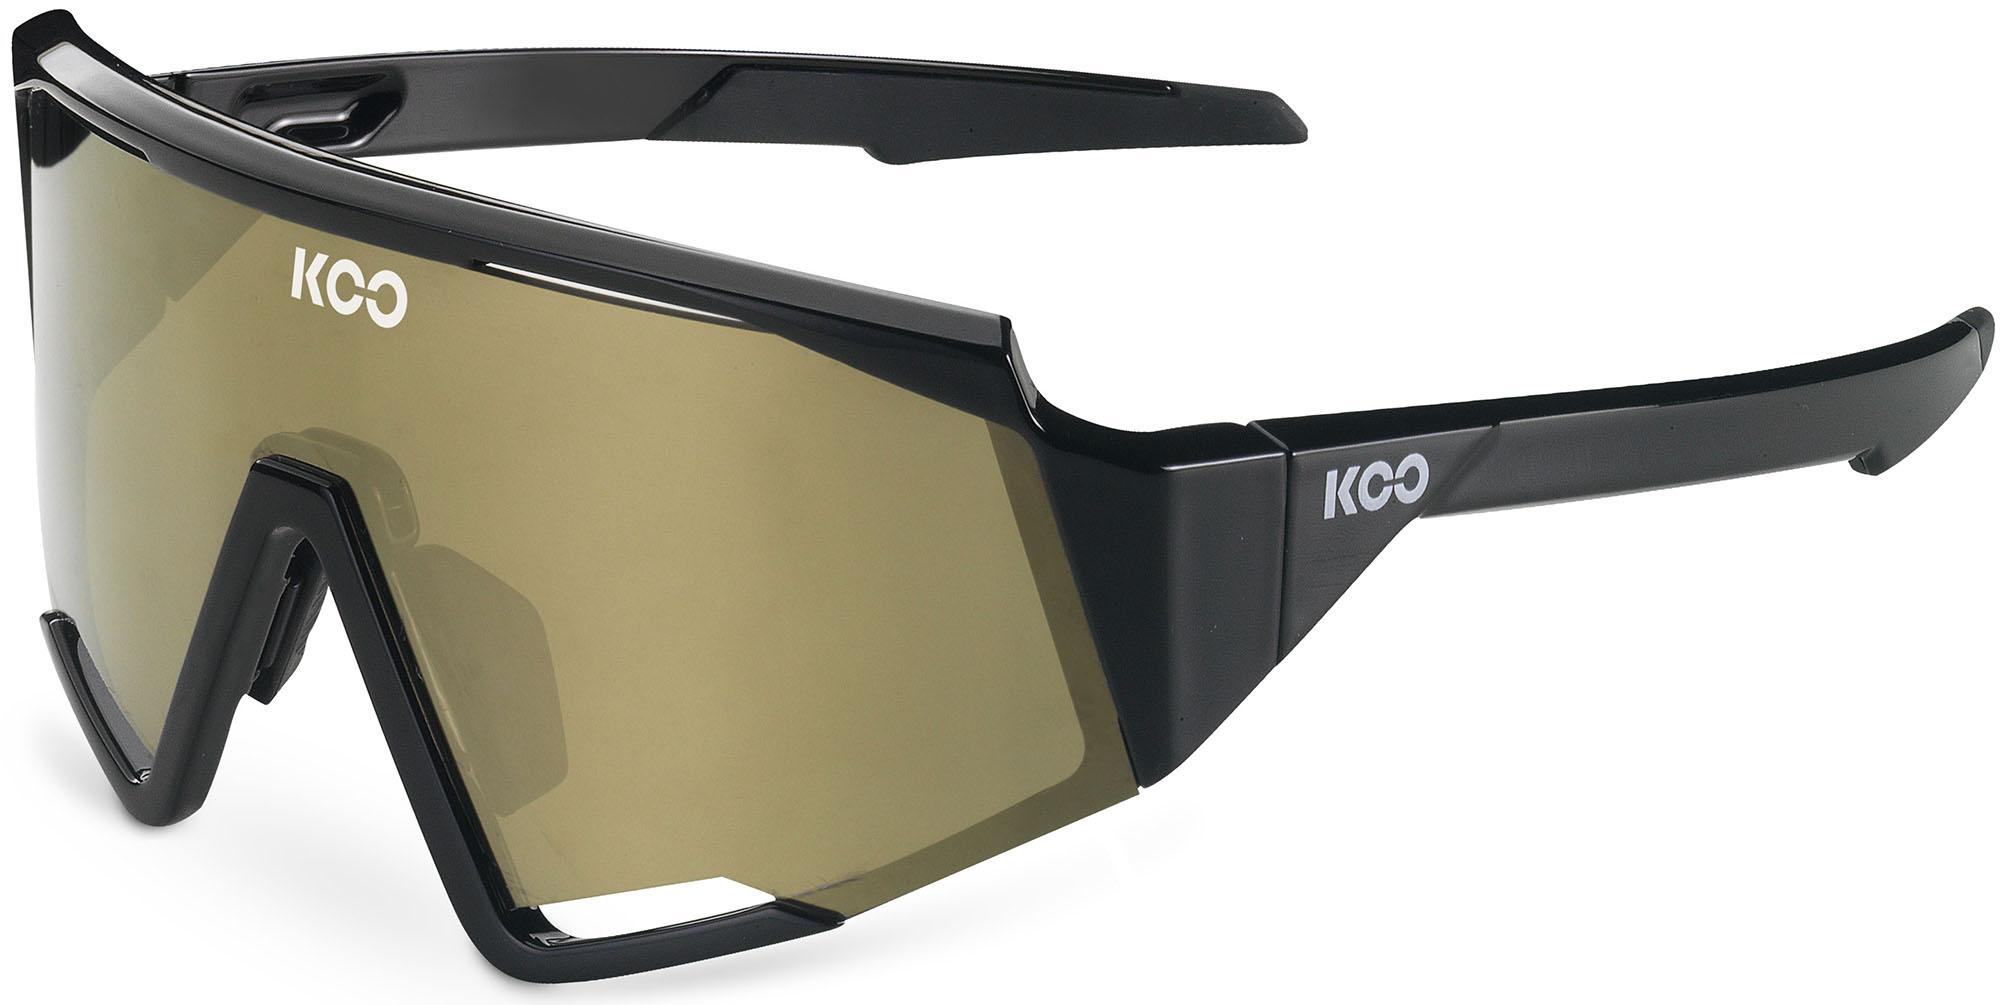 Koo Spectro Sunglasses (bronze Lens)  Black/bronze